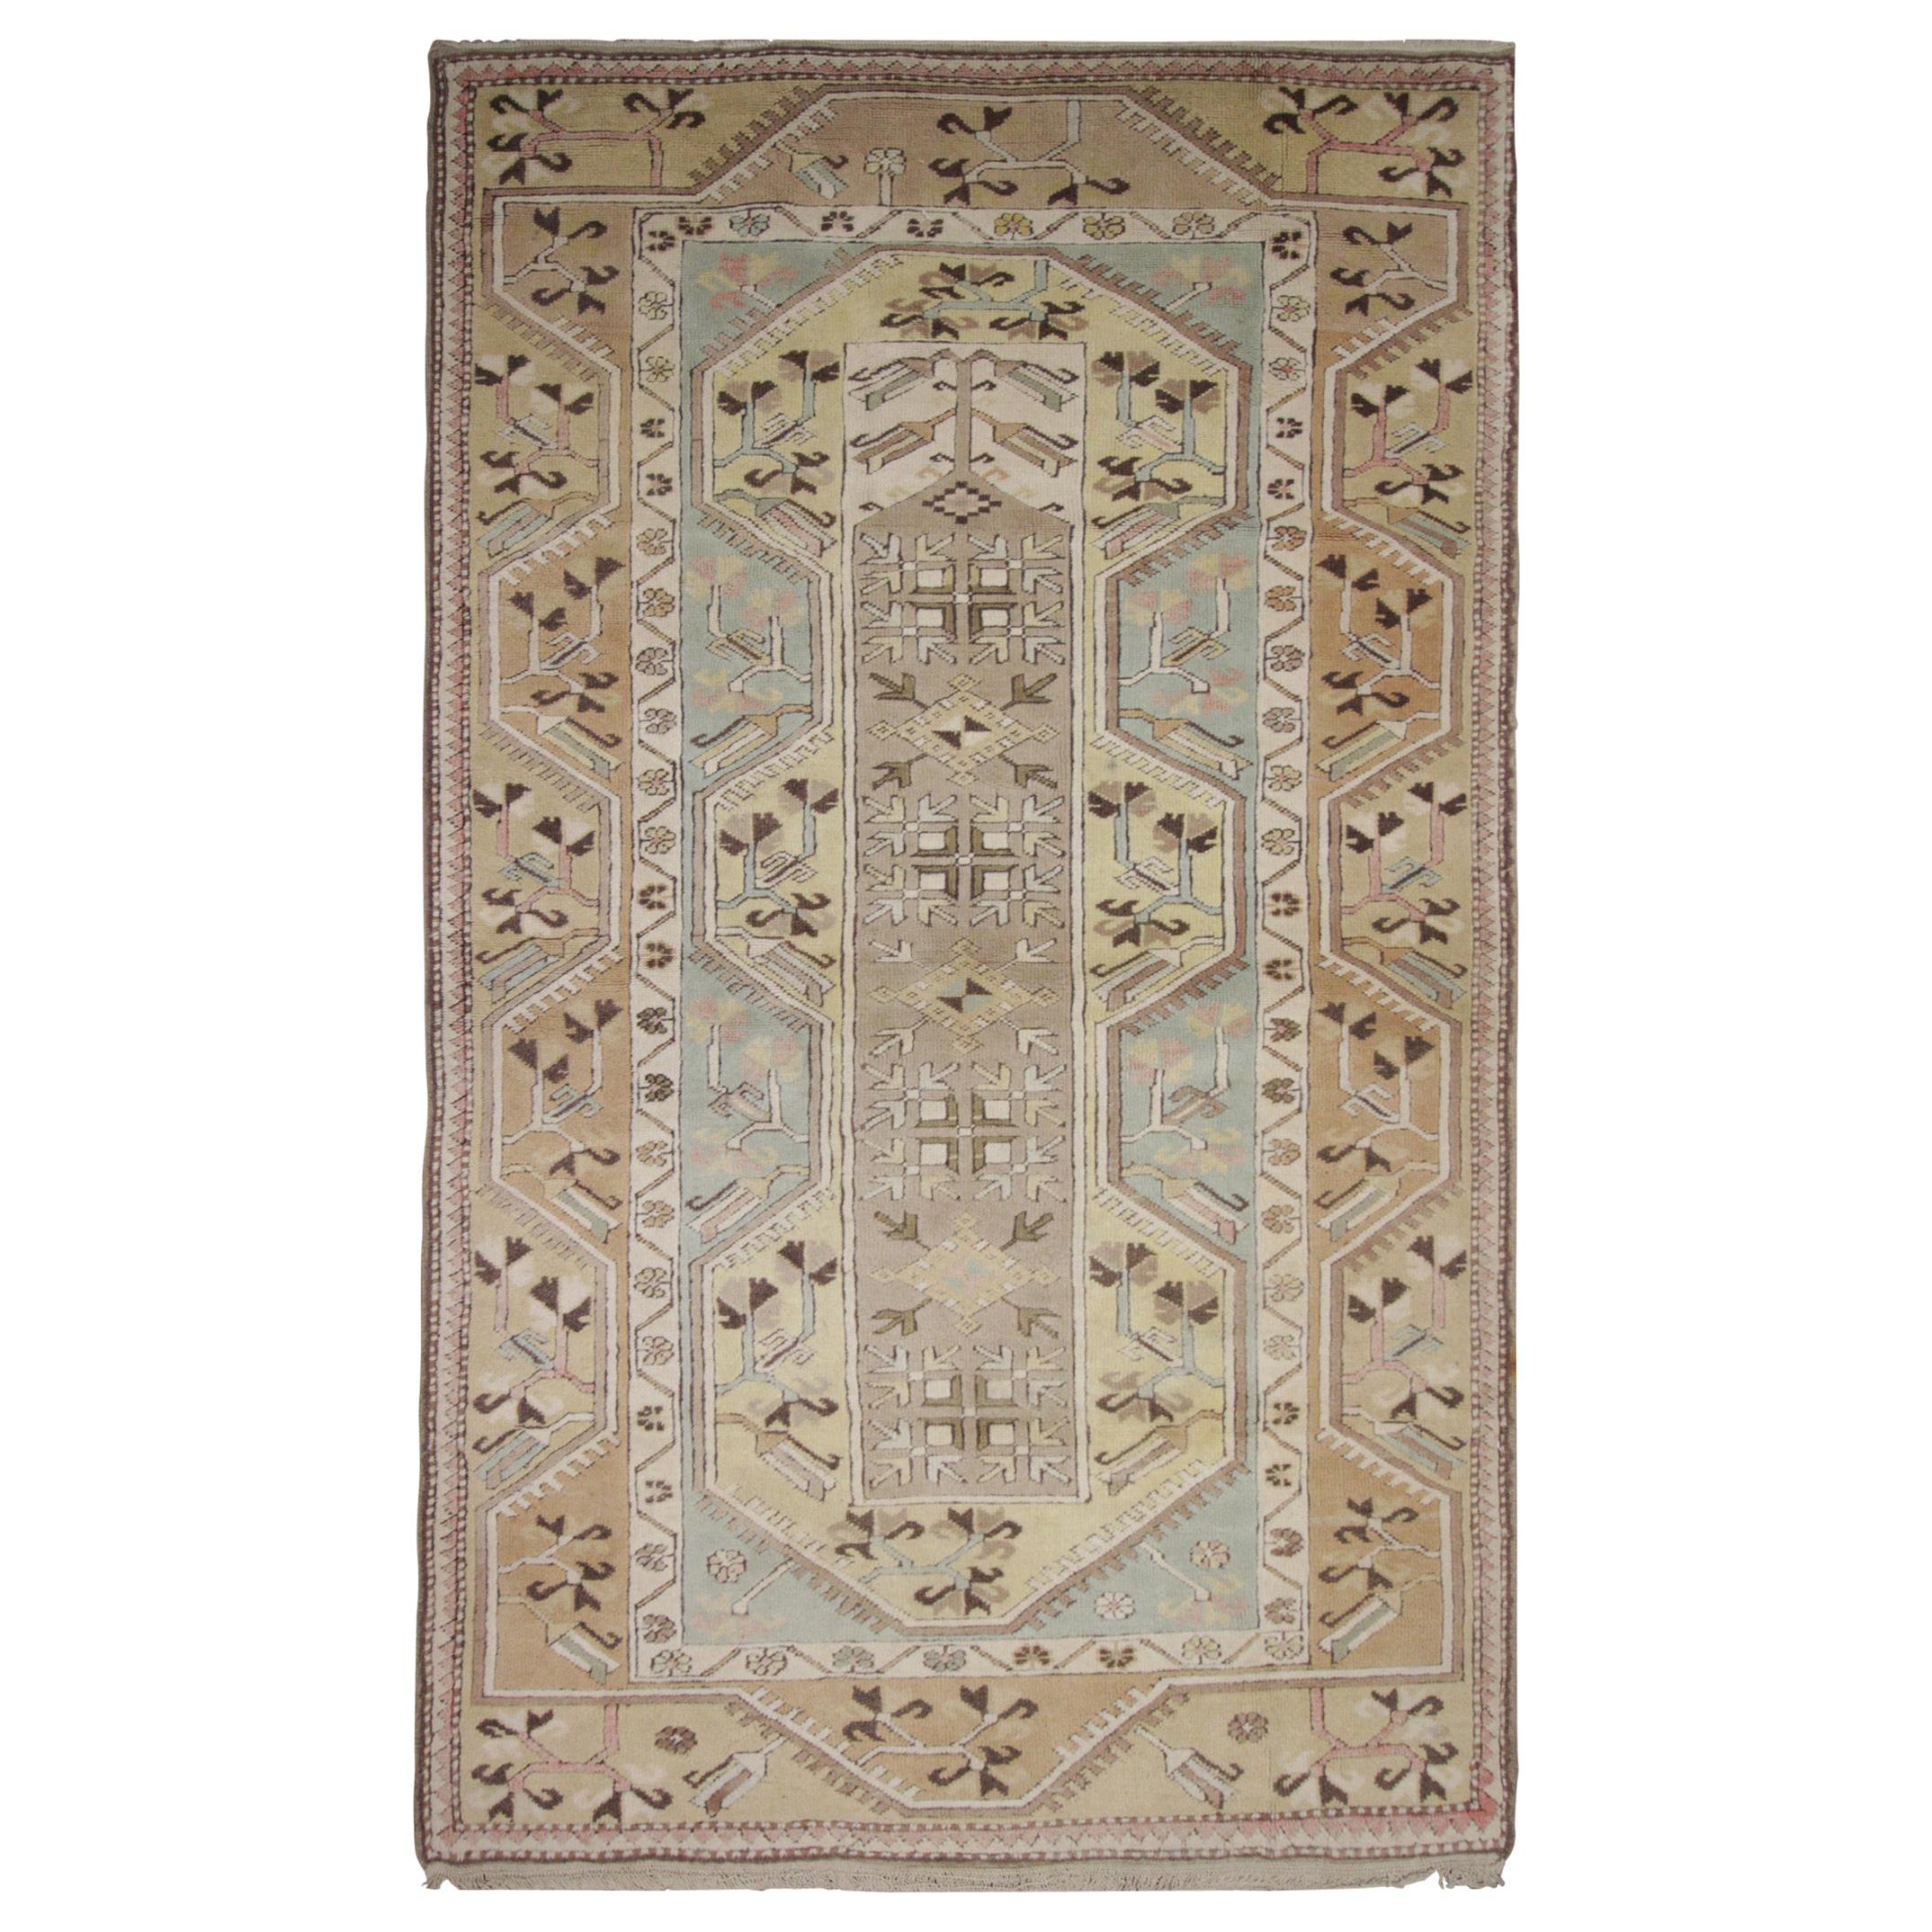 Vintage Carpet Turkish Rug Handwoven Beige Cream Wool Rug For Sale